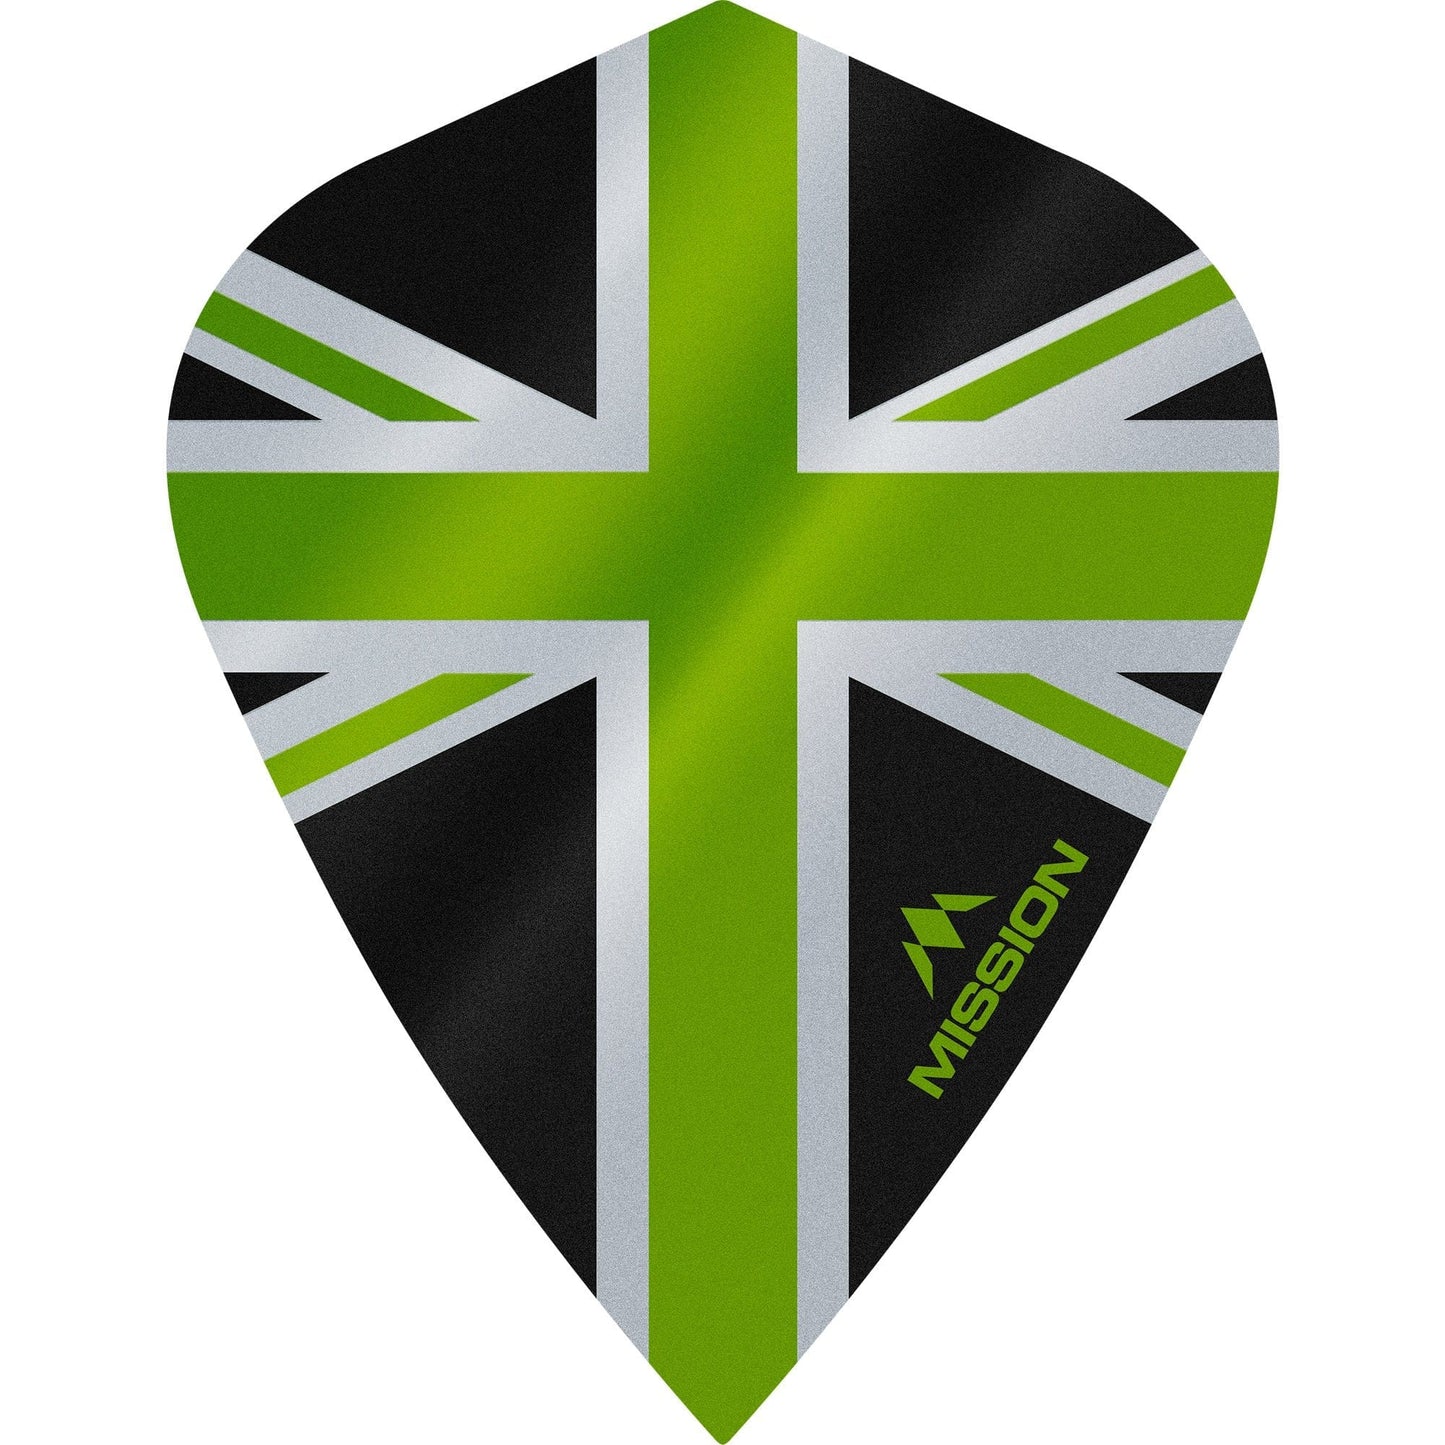 Mission Alliance Union Jack Dart Flights - Kite - Black Black Green